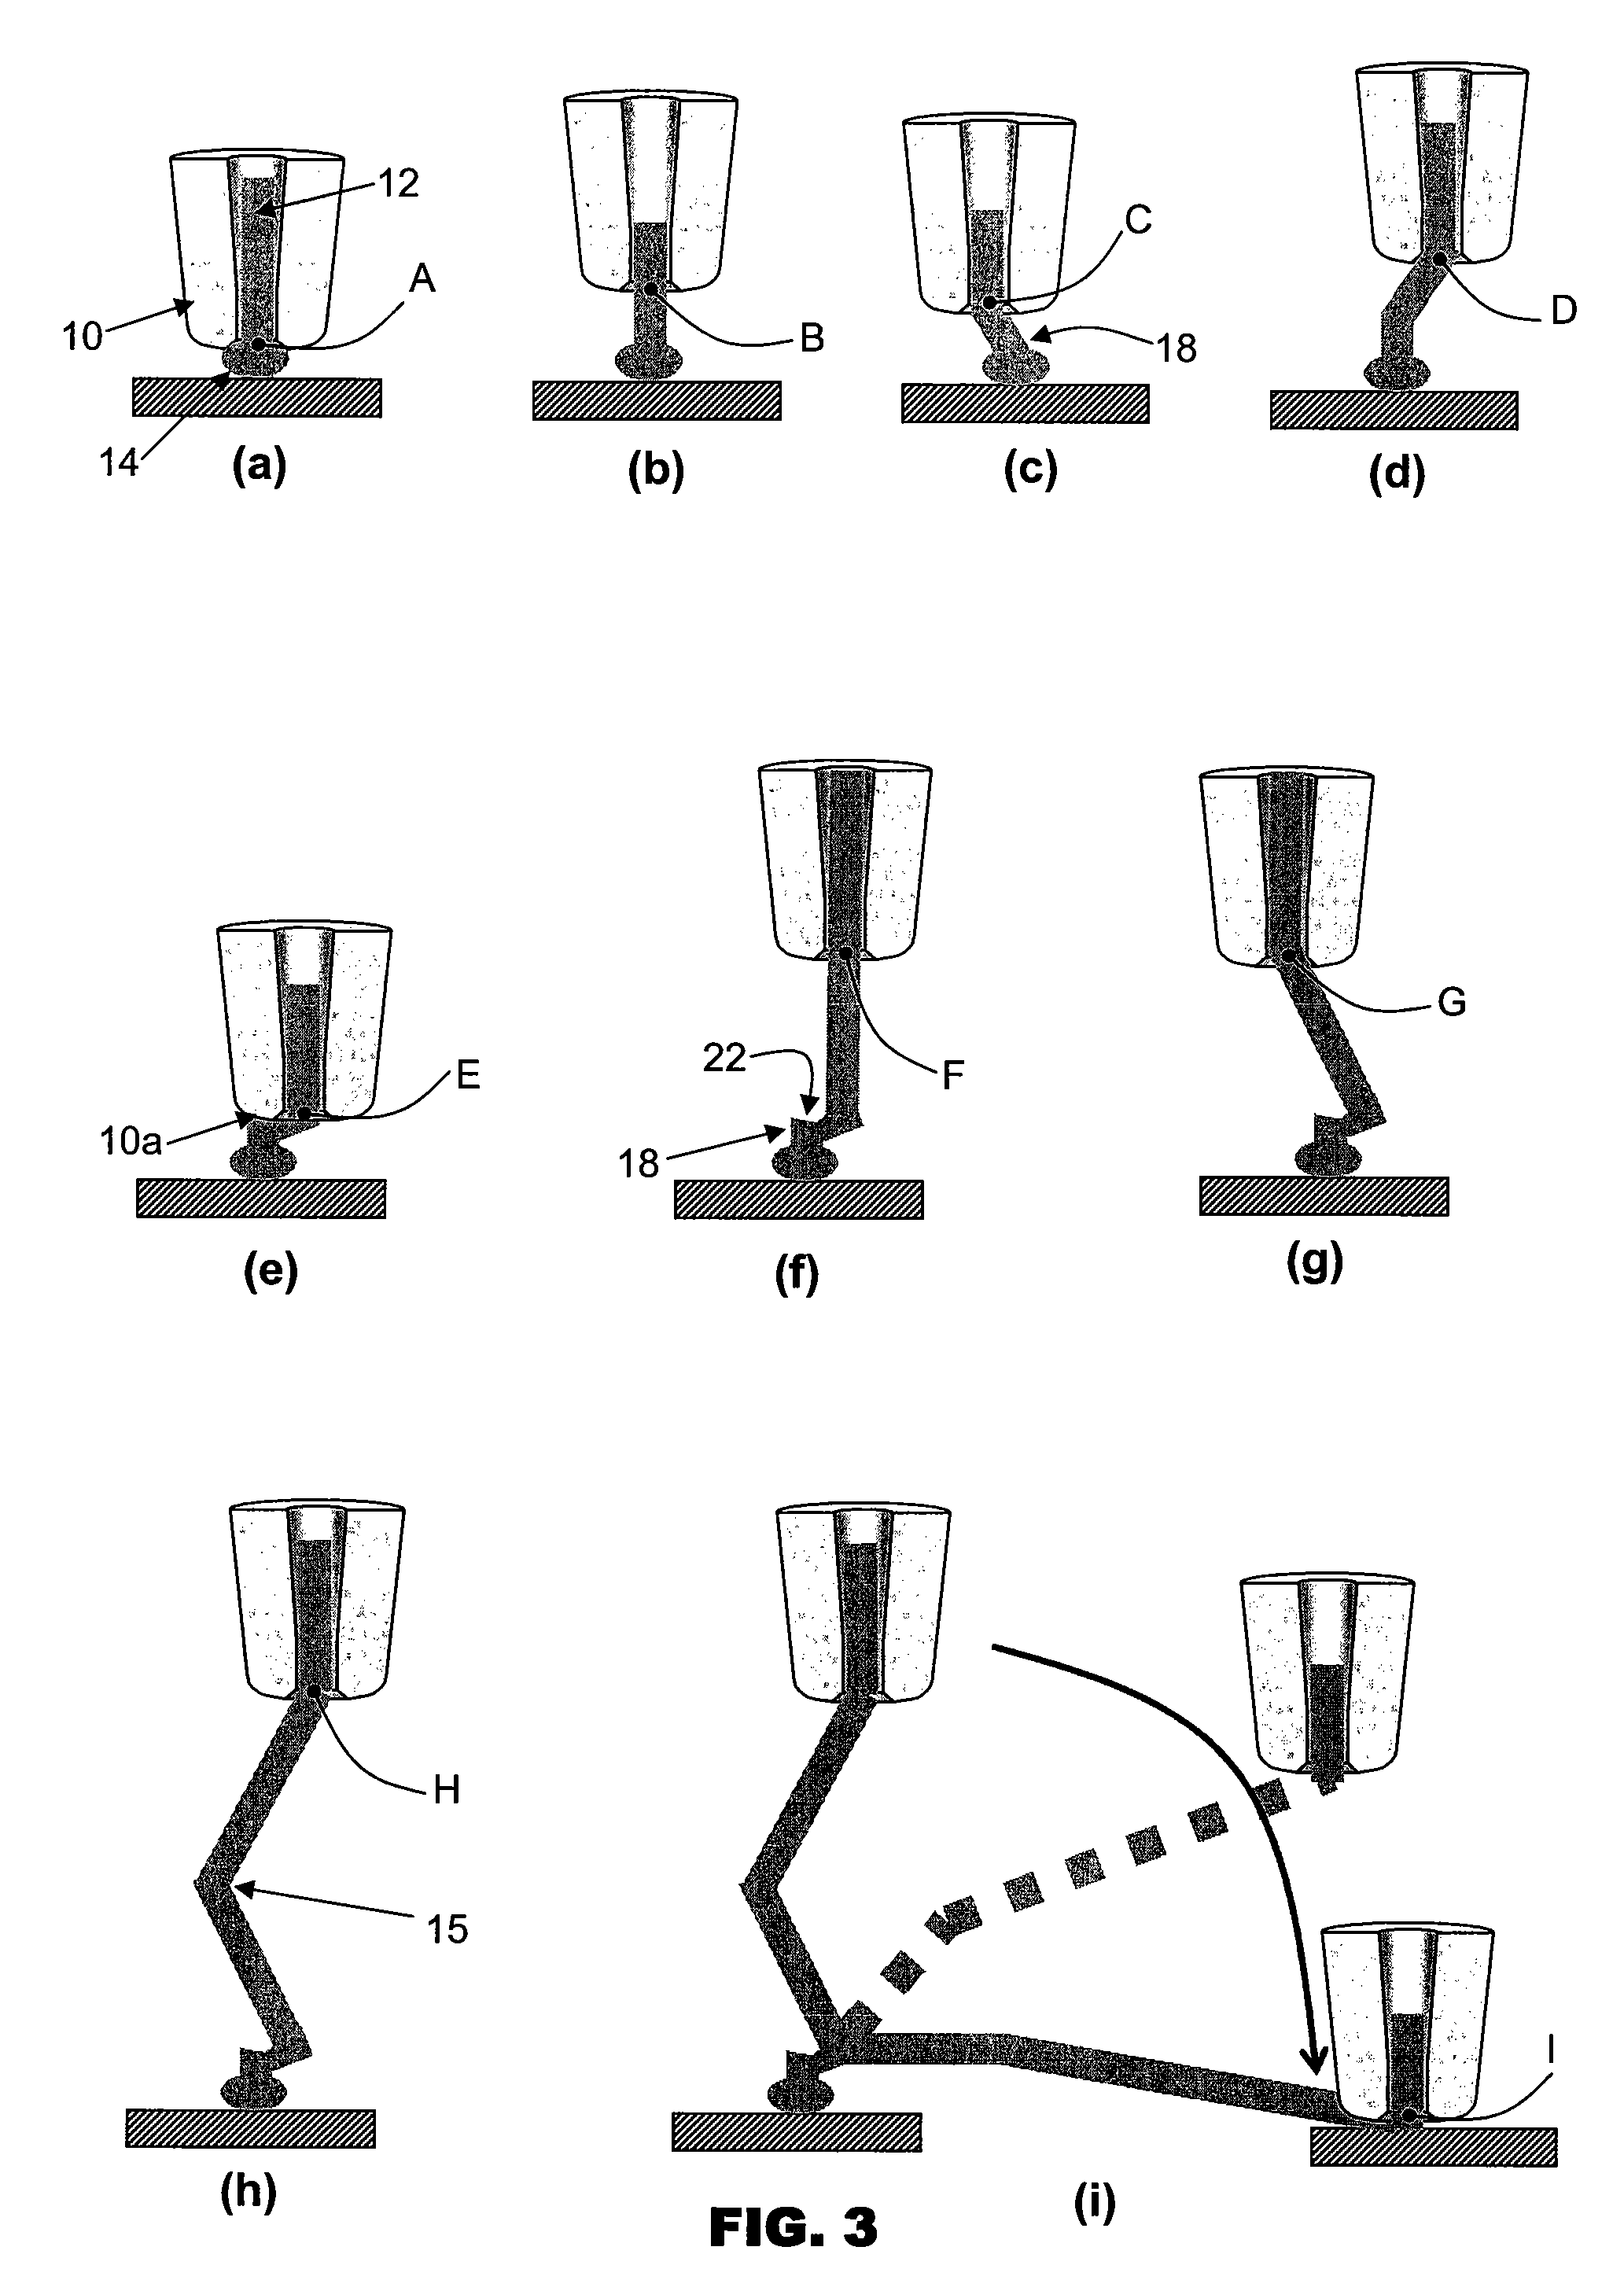 Wire bonding method for forming low-loop profiles